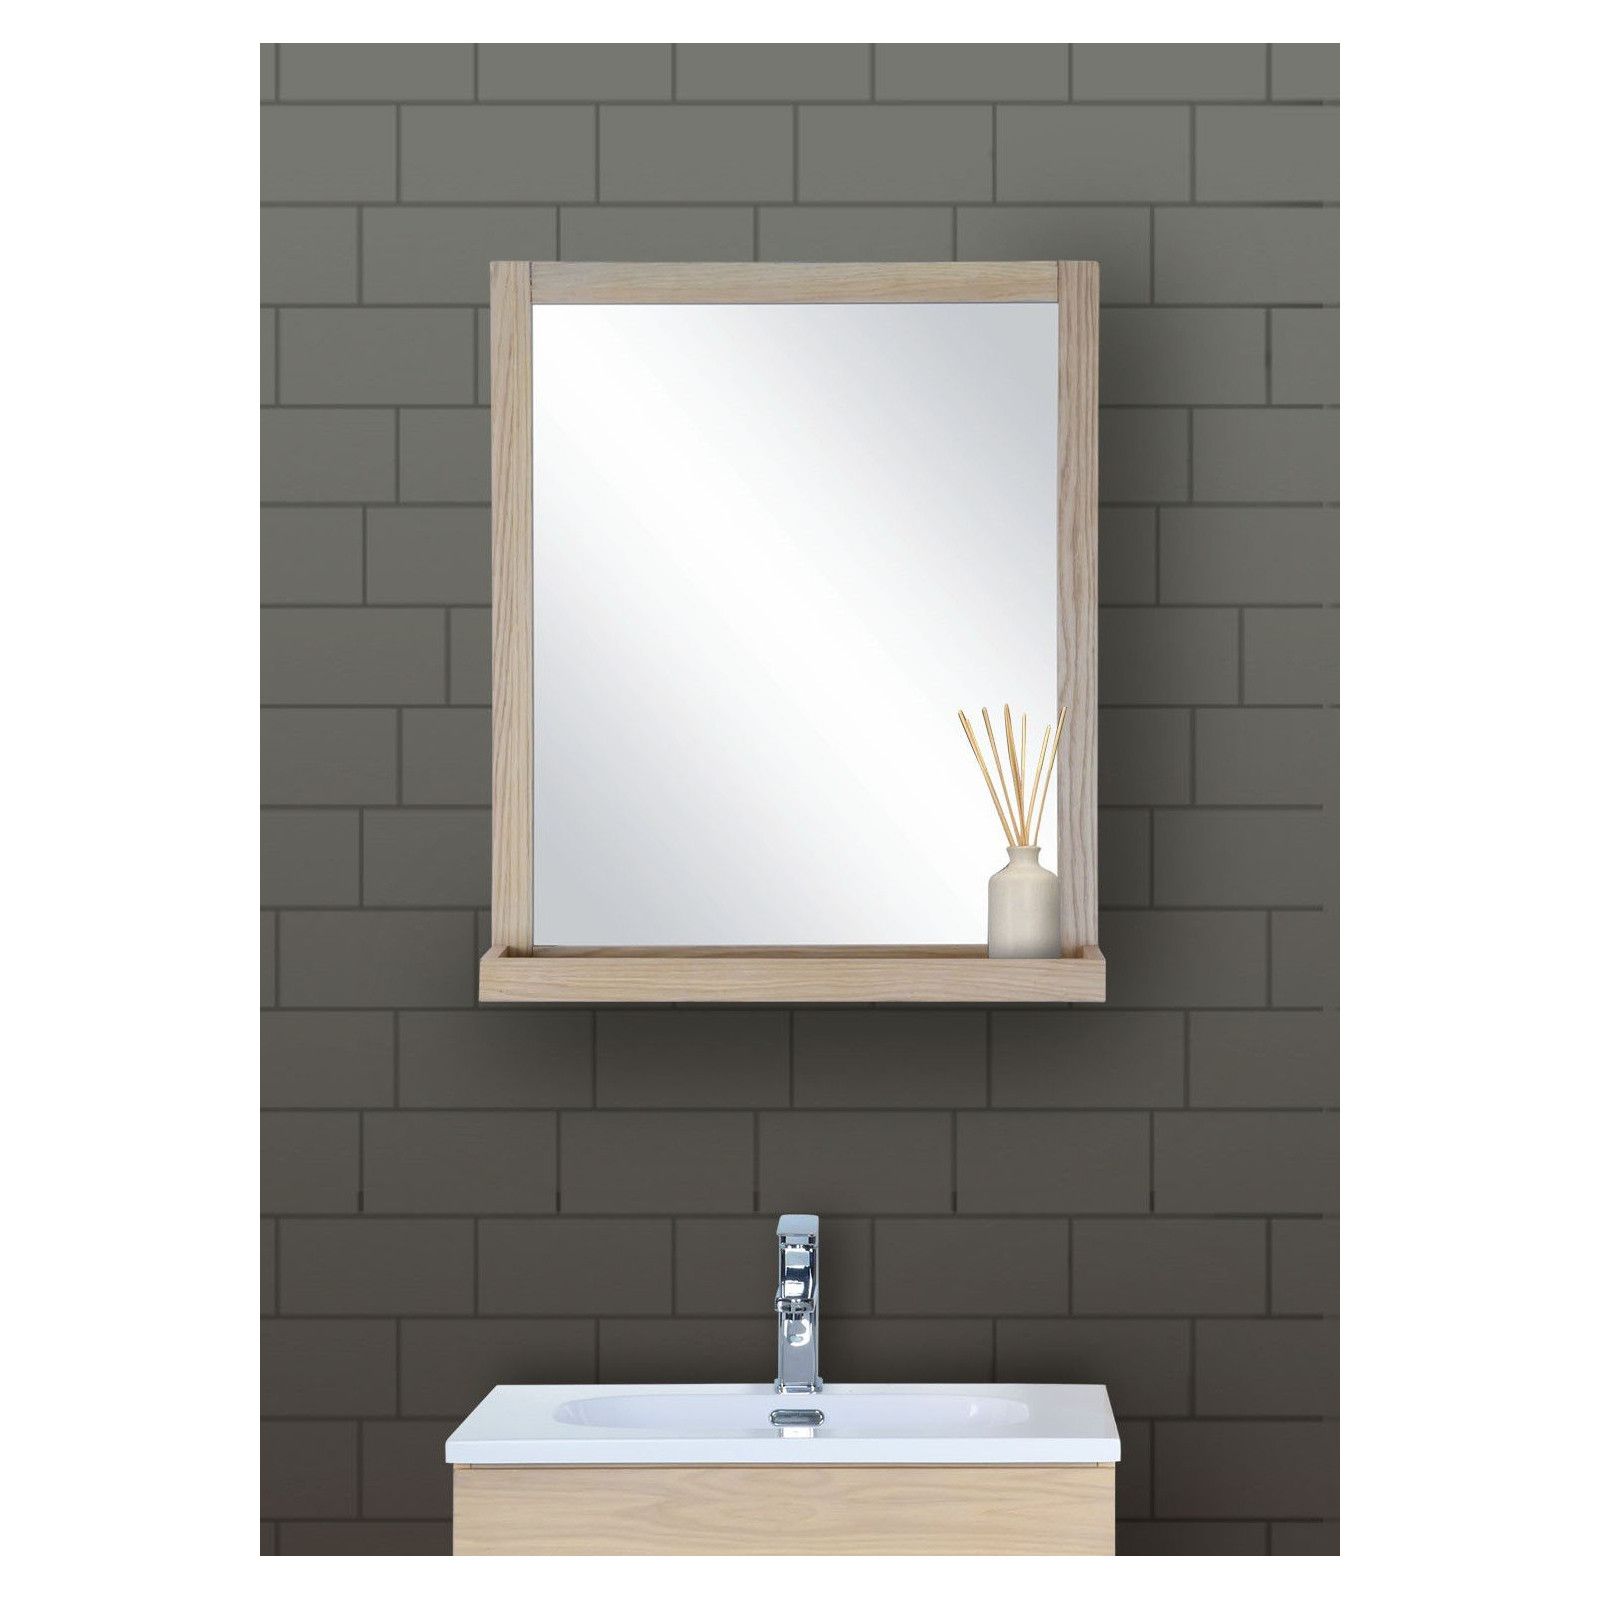 Miroir salle de bain L60 x H70 cm chêne ENIO